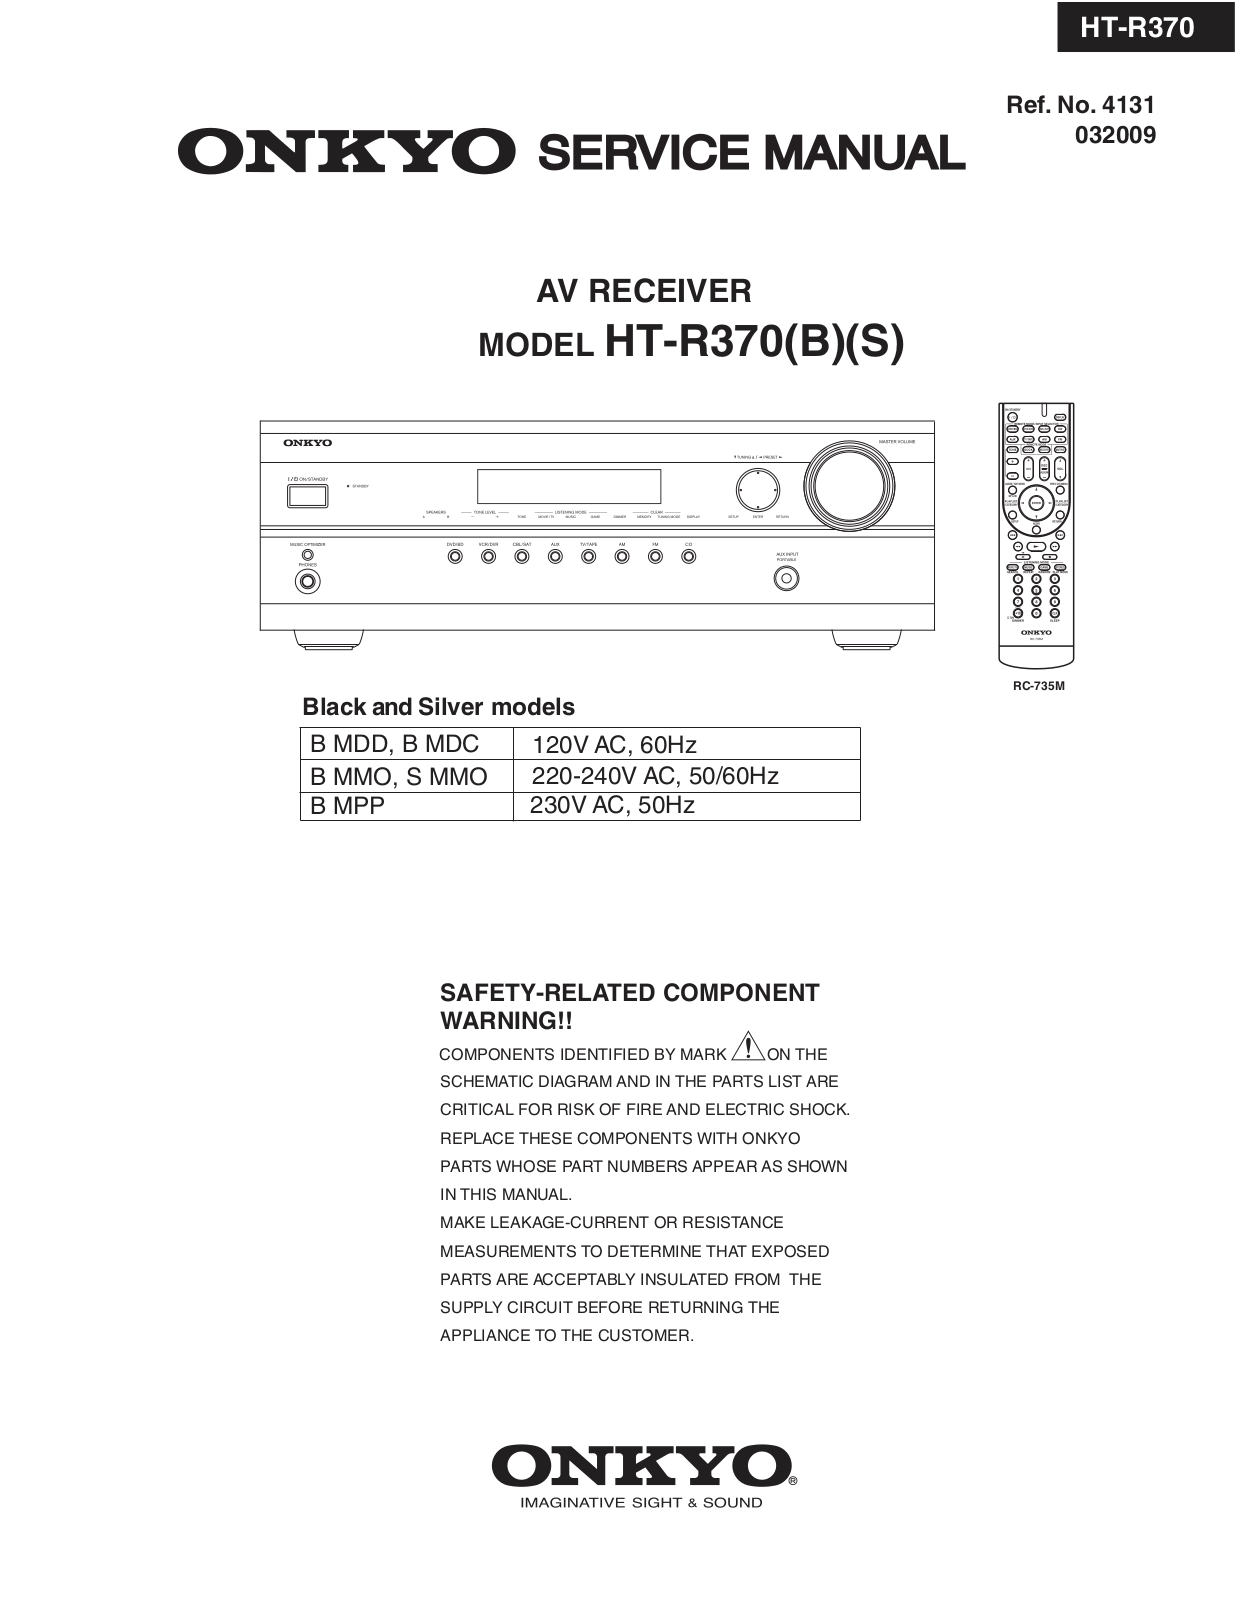 Onkyo HTR-370 Service Manual